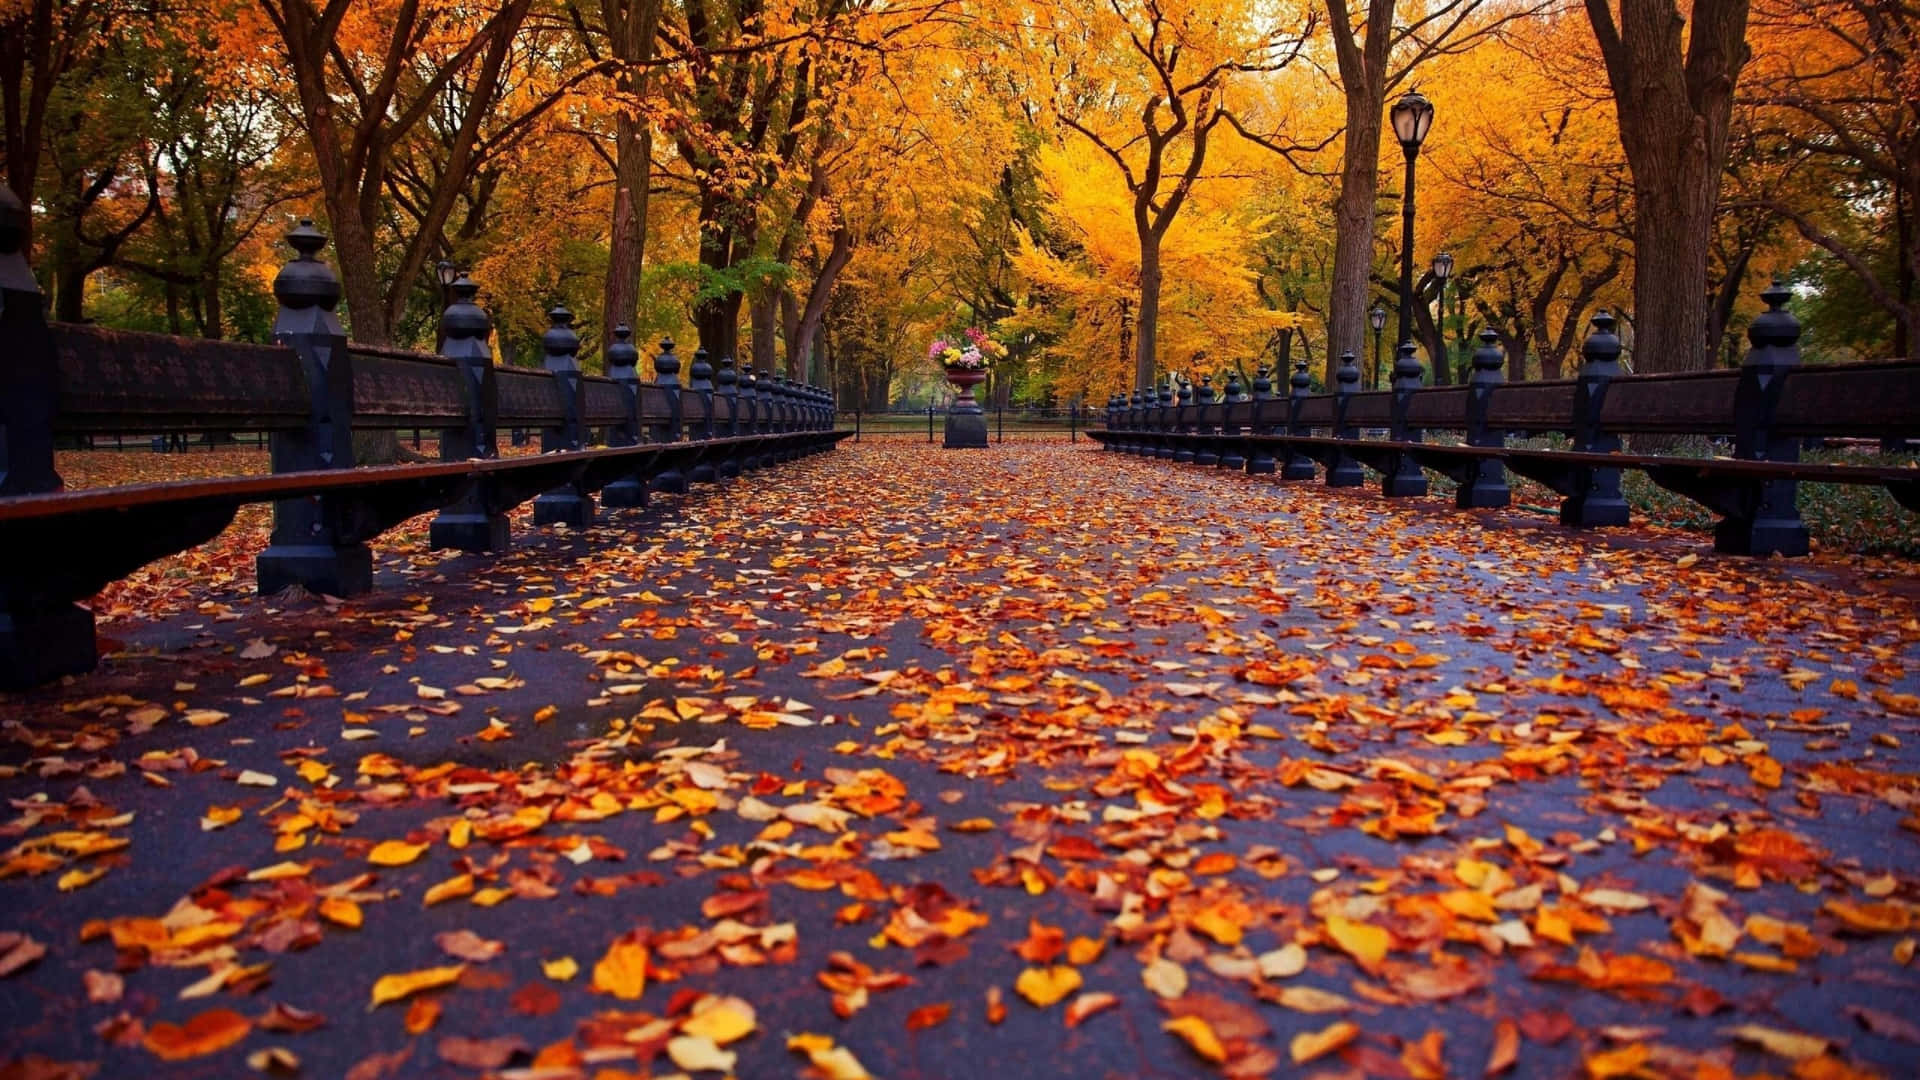 Capture The Joy Of Autumn With This Vibrant Seasonal Scene Wallpaper